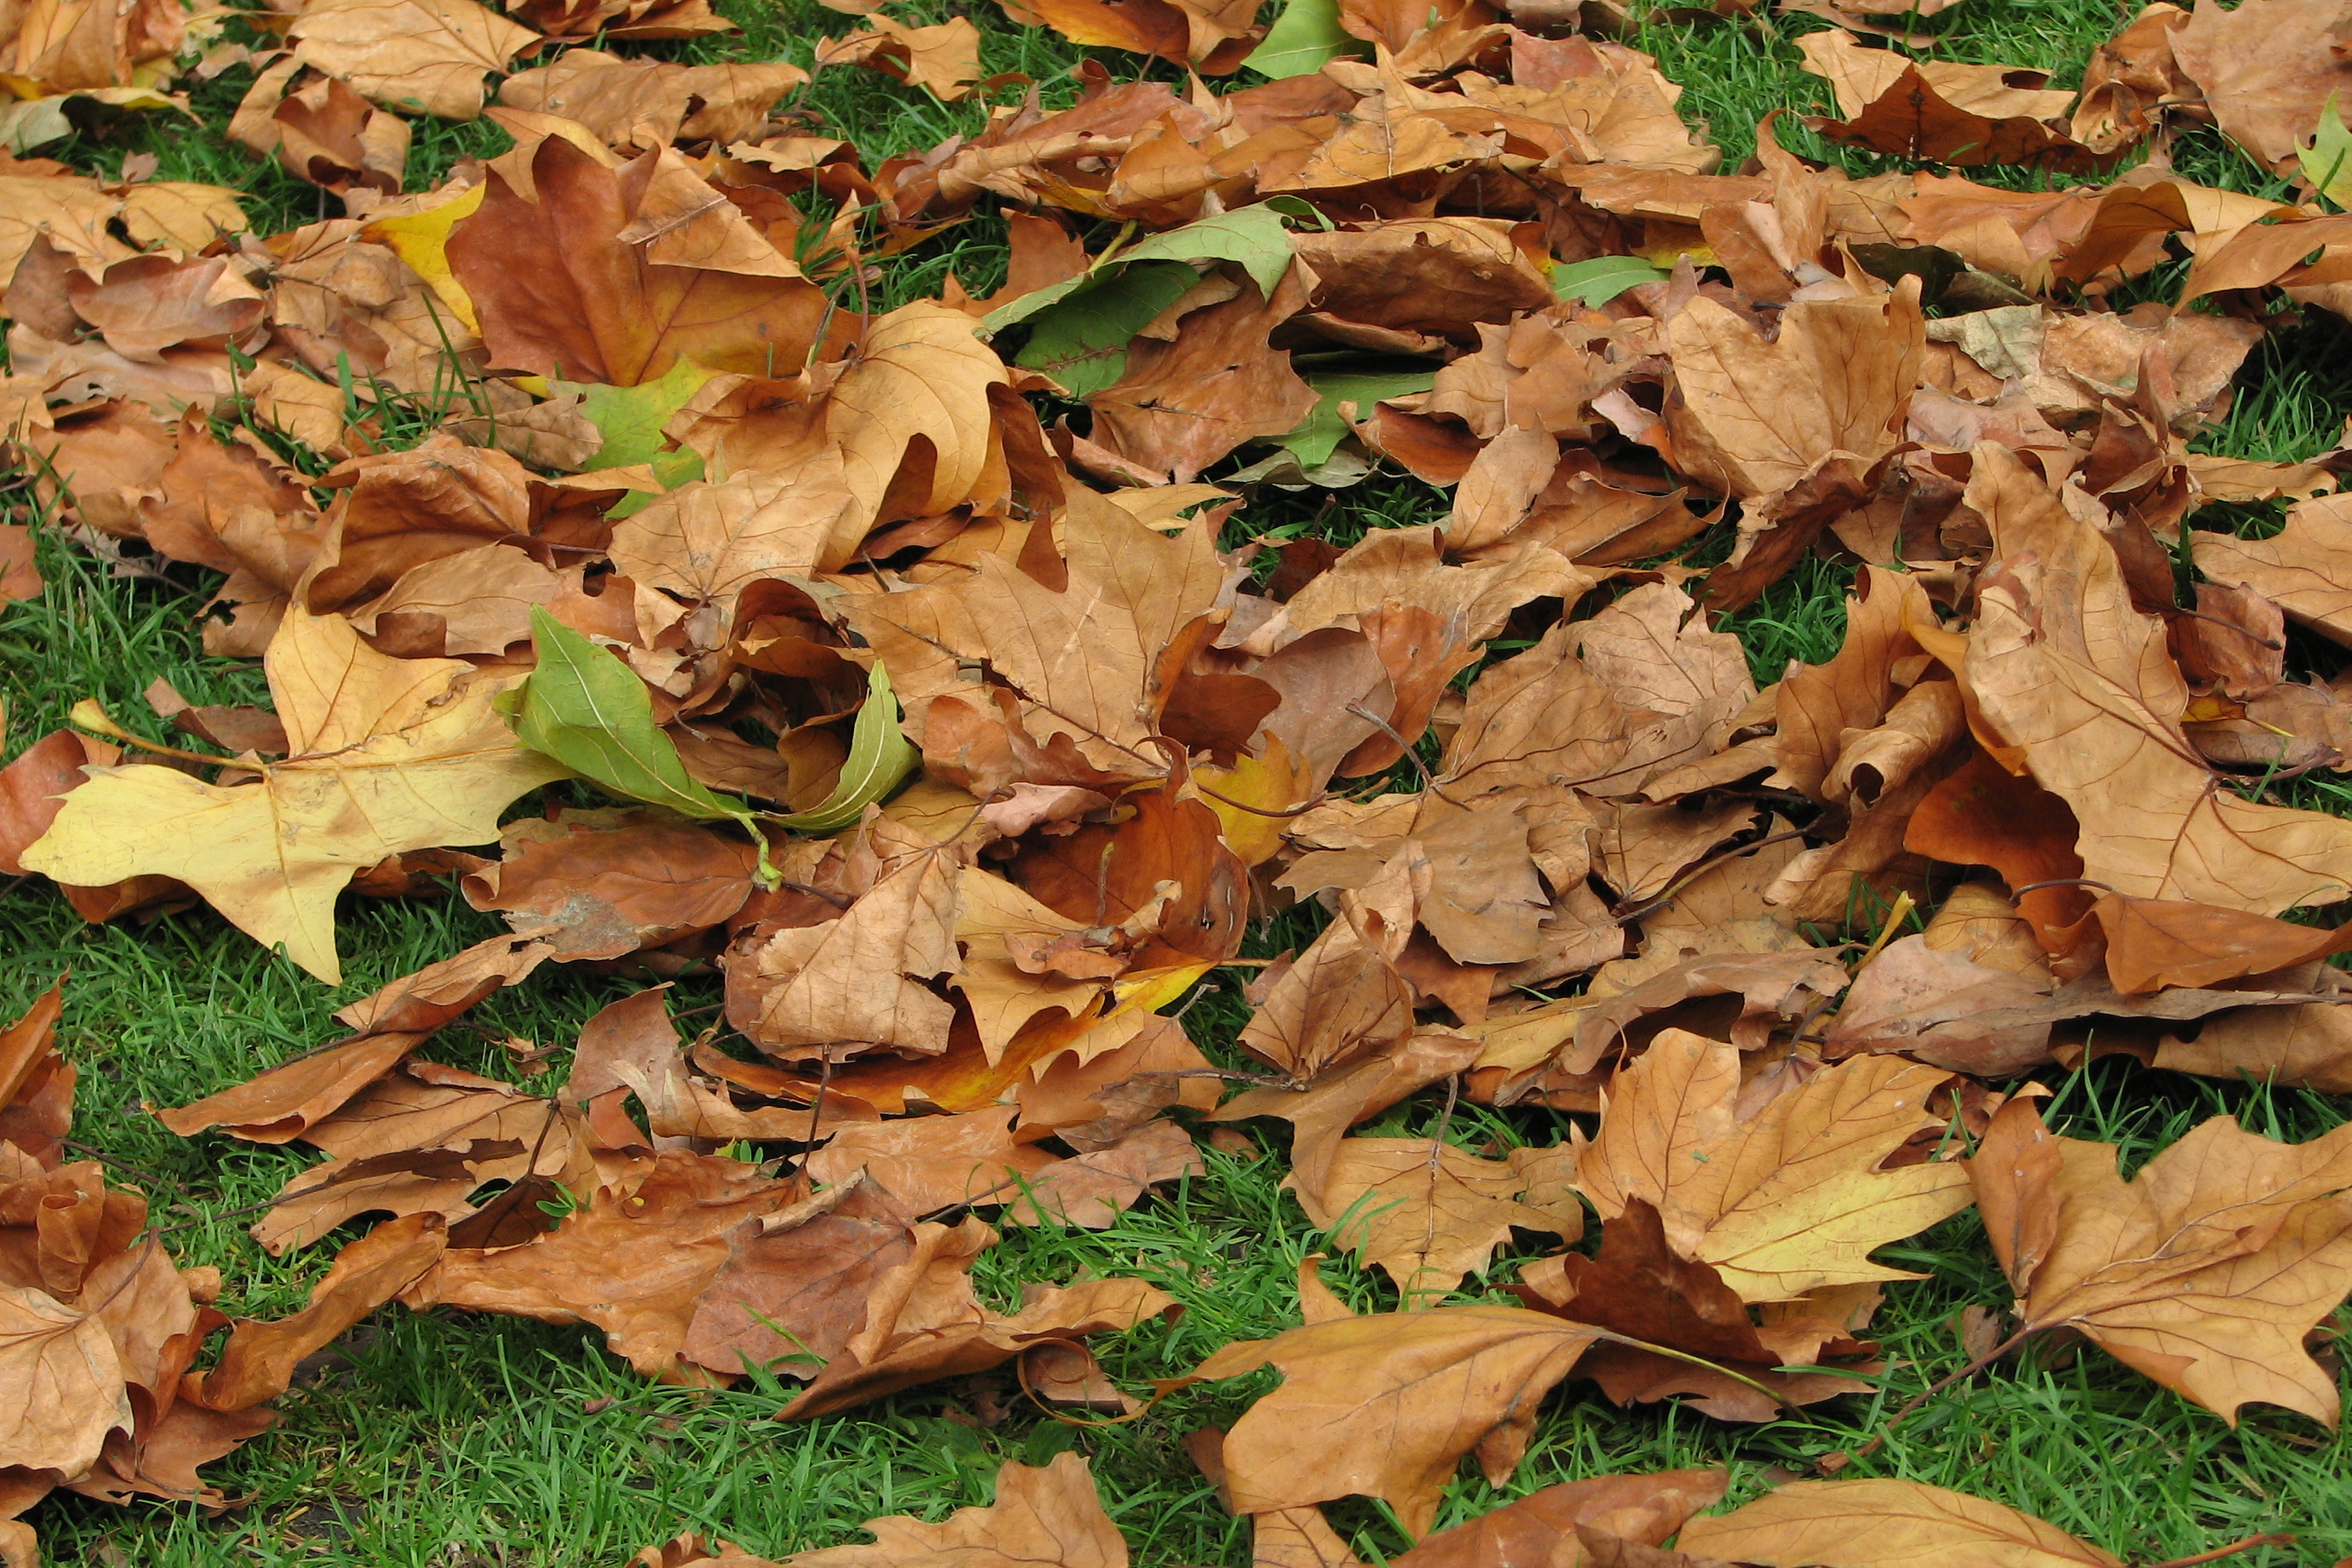 File:Fallen autumn leaves.jpg - Wikimedia Commons